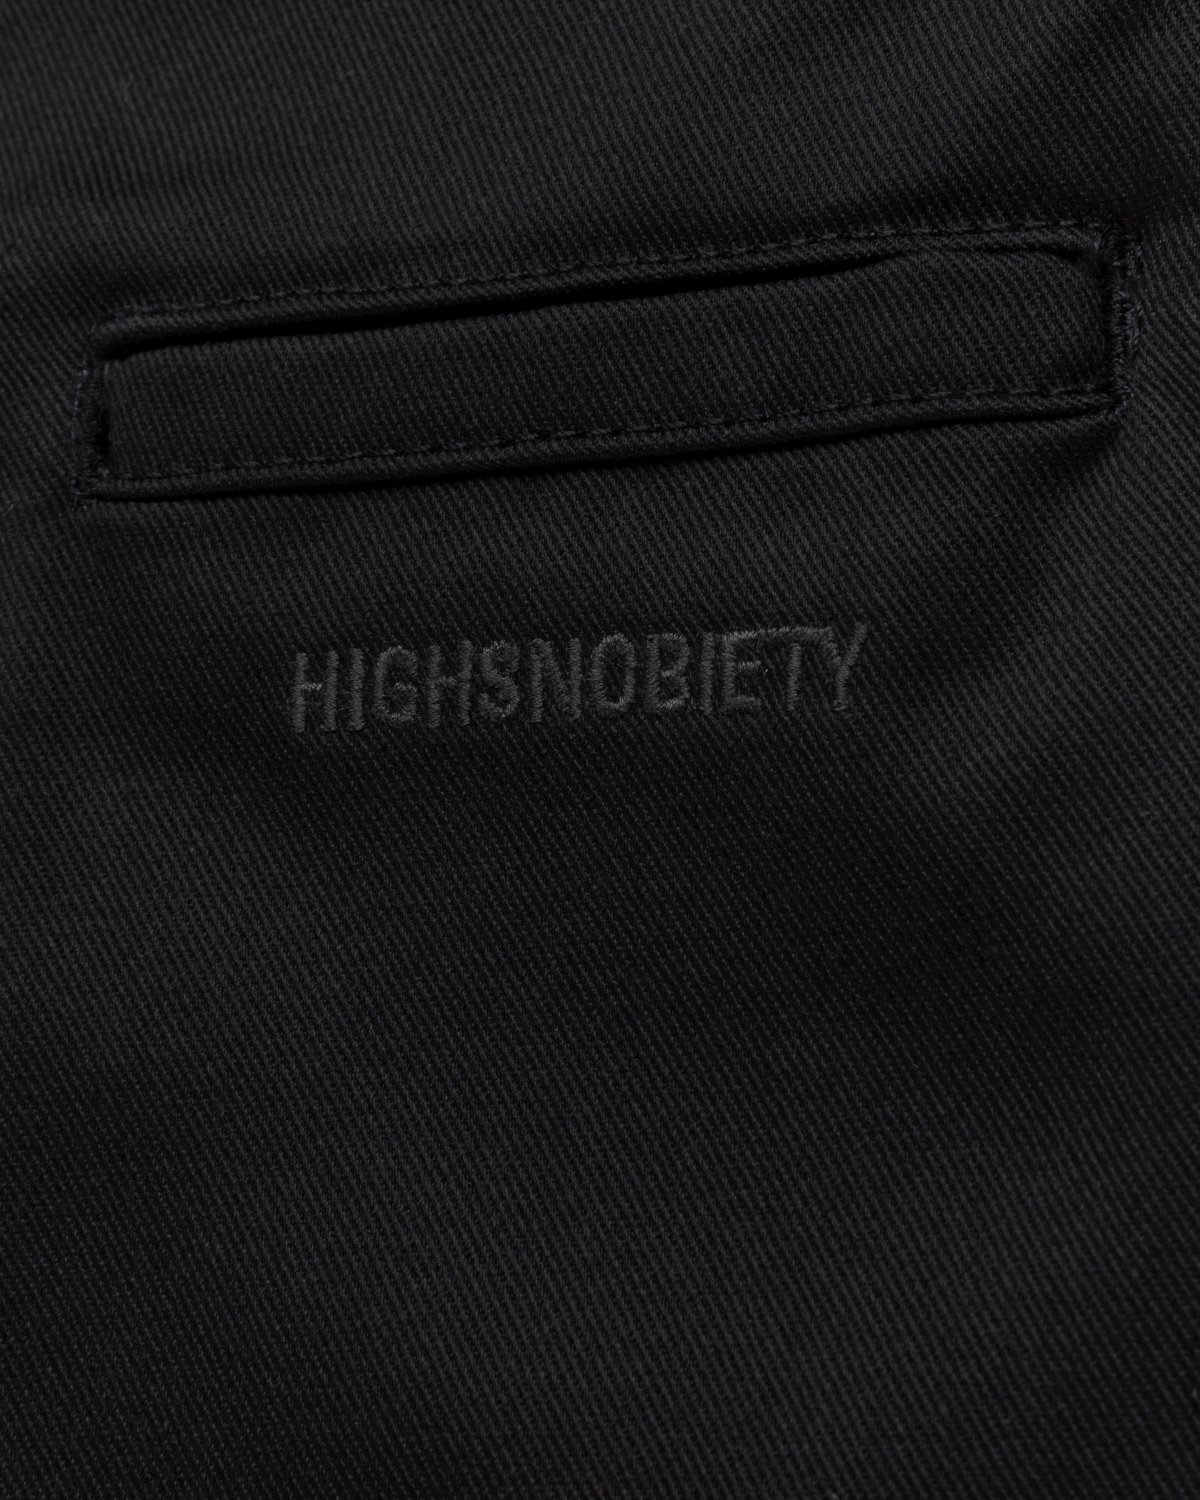 Highsnobiety x Dickies - Pleated Work Pants Black - Clothing - Black - Image 4